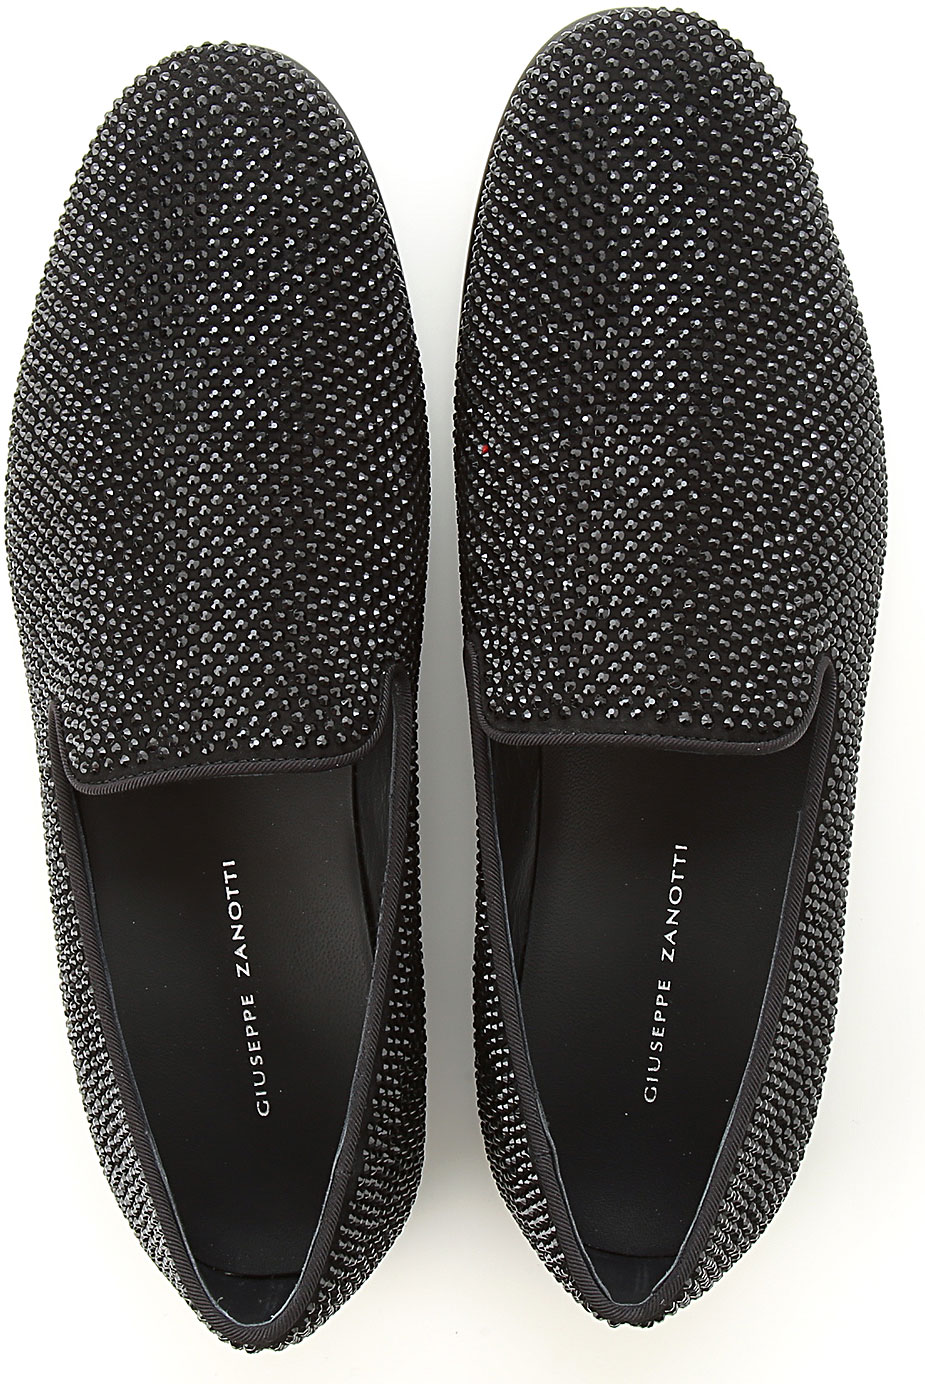 Chaussures Homme Giuseppe Zanotti Design, Code produit: iu90054-001-